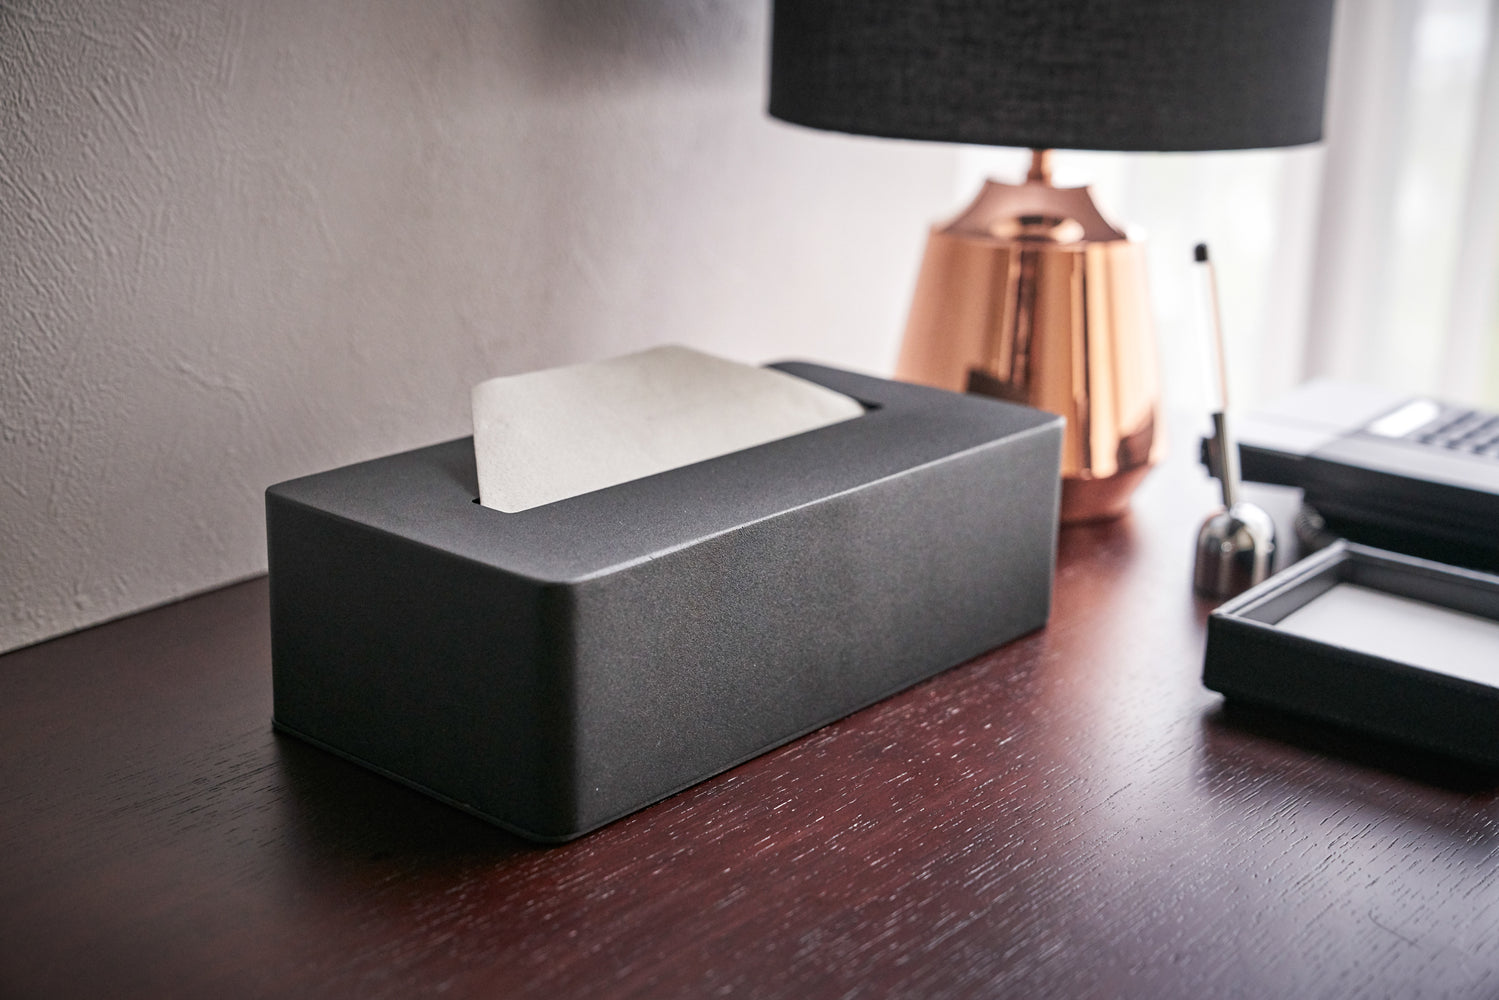 View 9 - Black Tissue Case on desk countertop by Yamazaki Home.